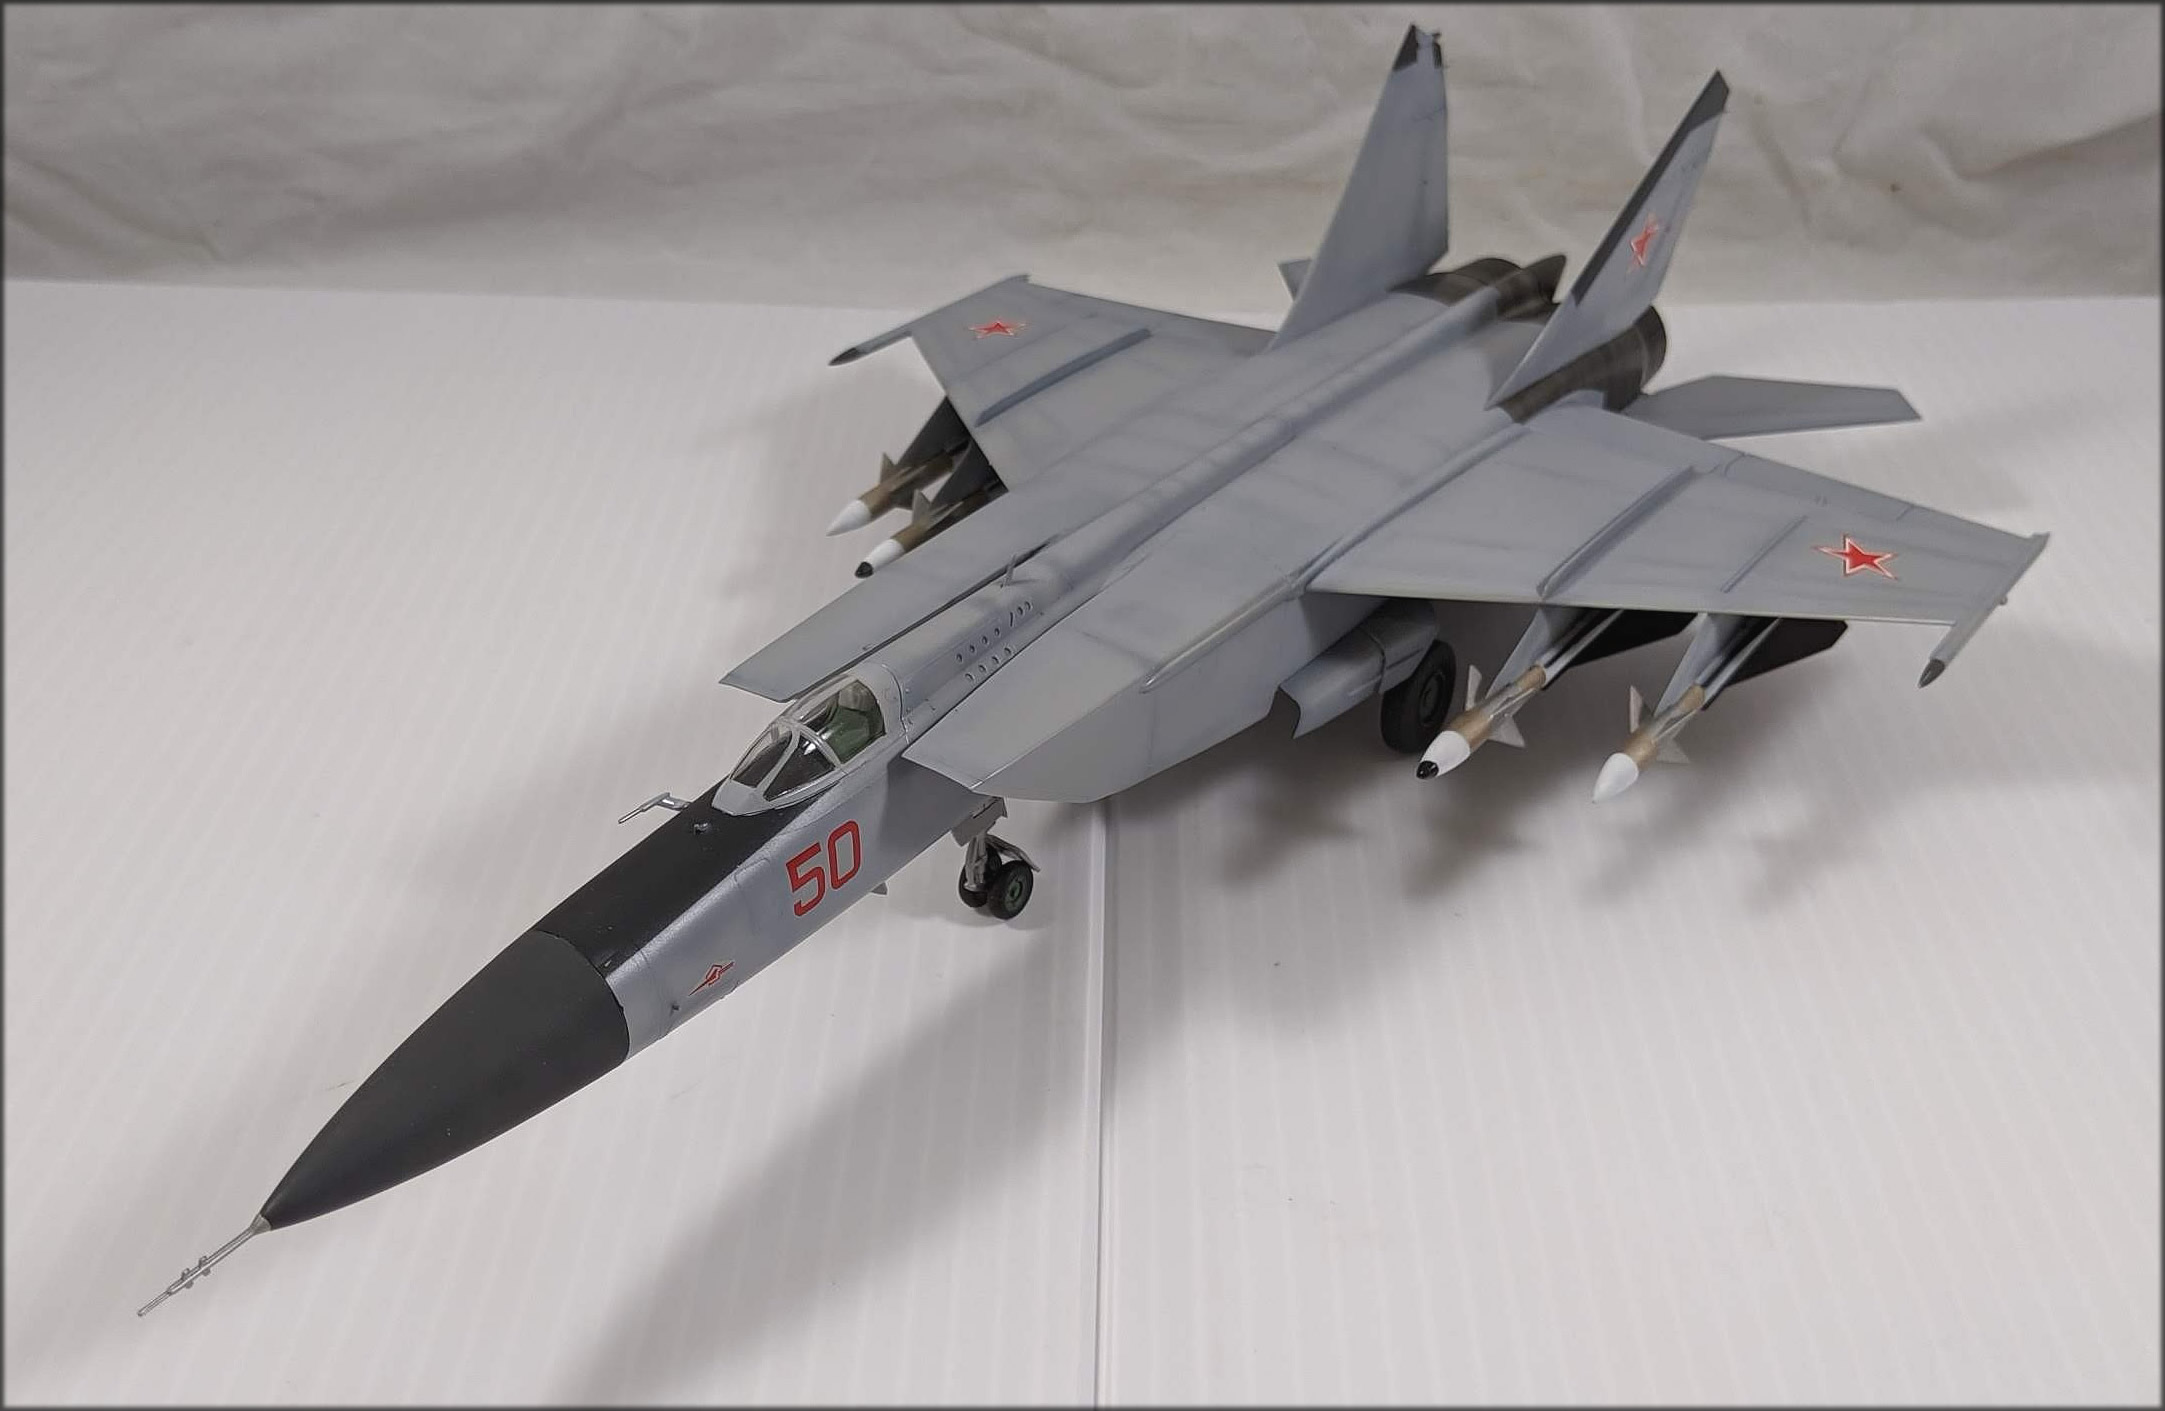 MiG-25 “Foxbat”